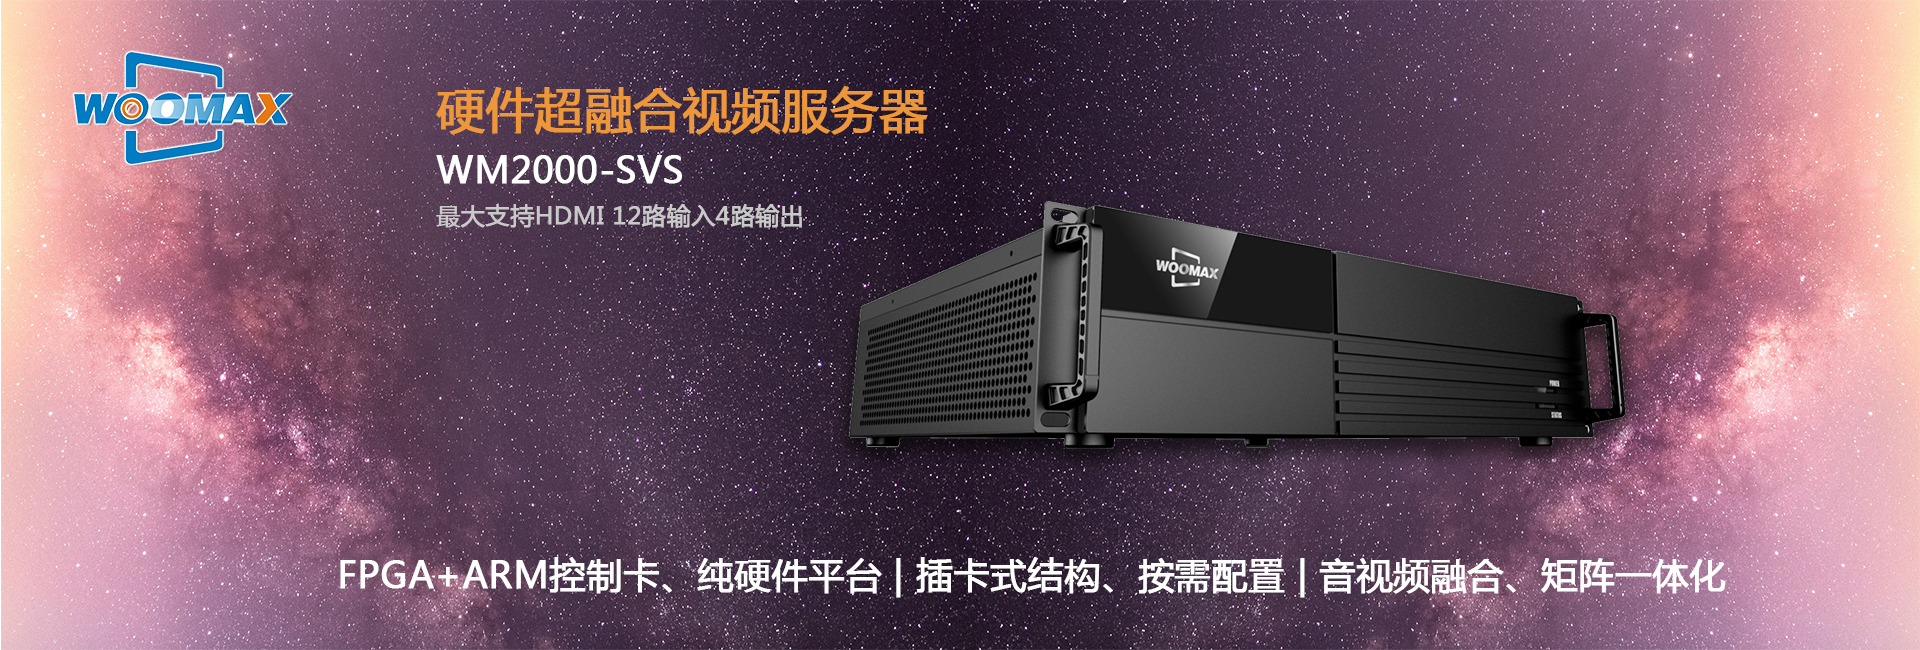 WM2000硬件超融合视频服务器